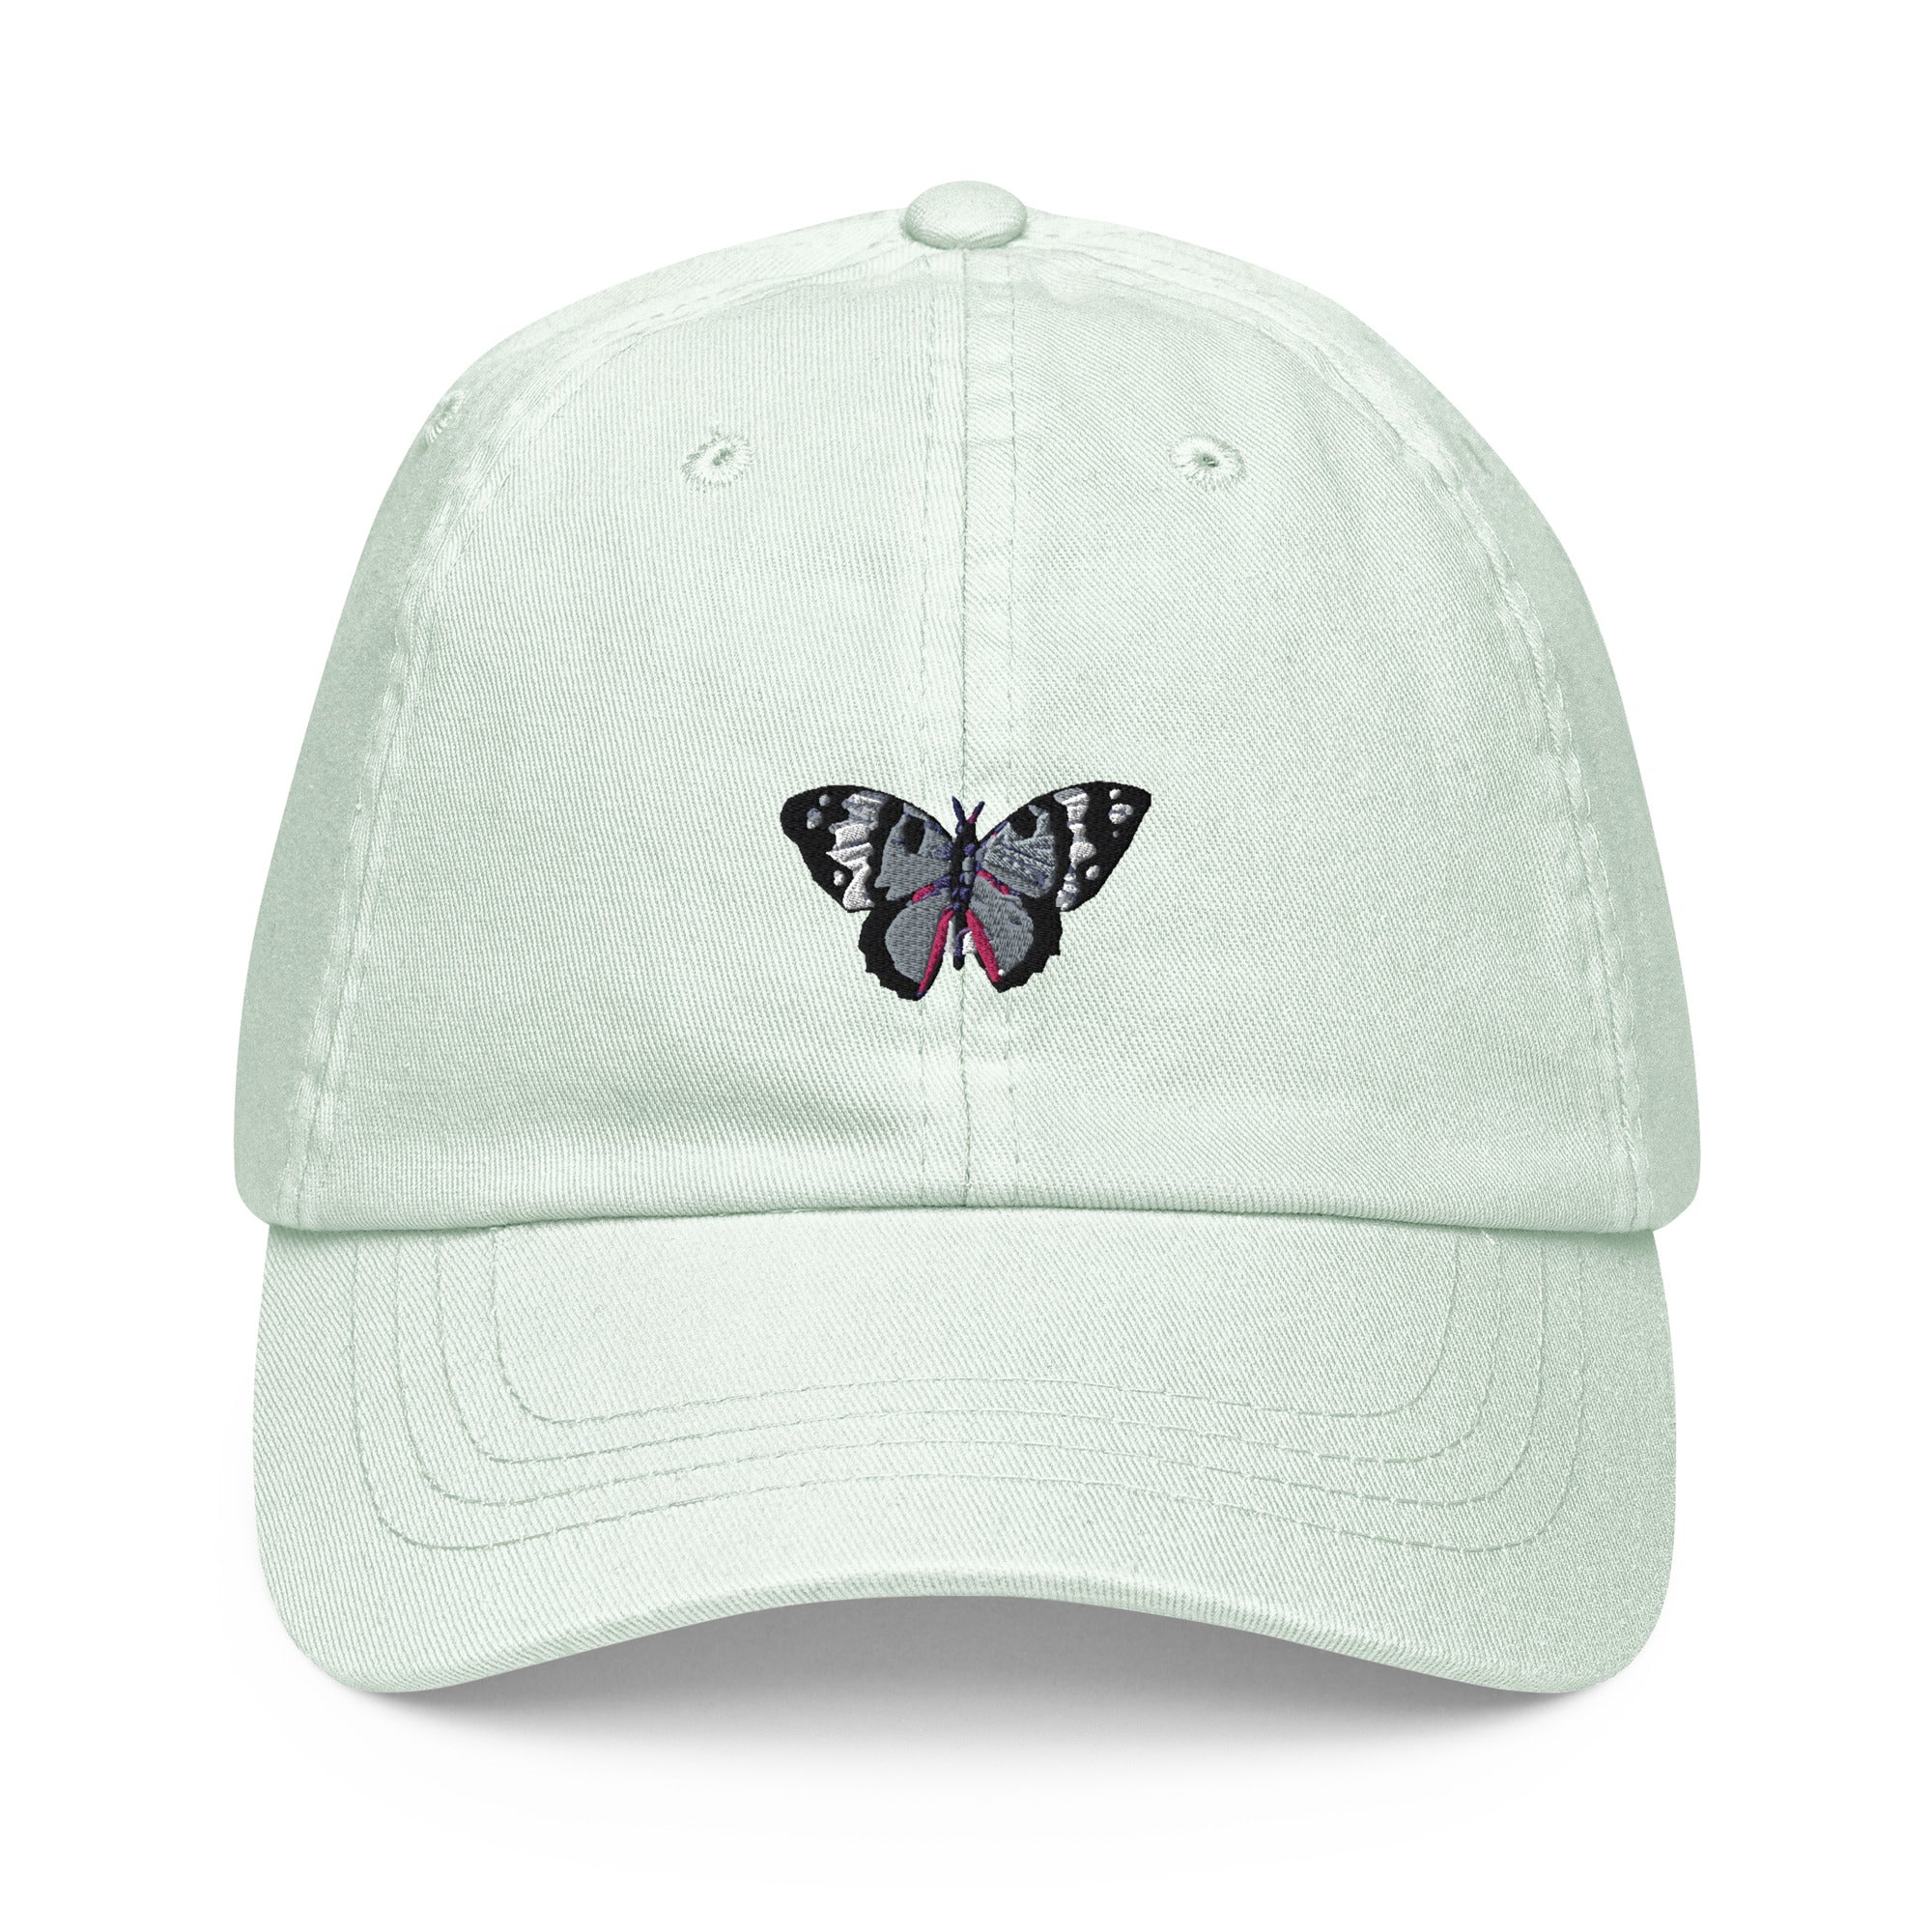 Gorra pastel con bordado de mariposa